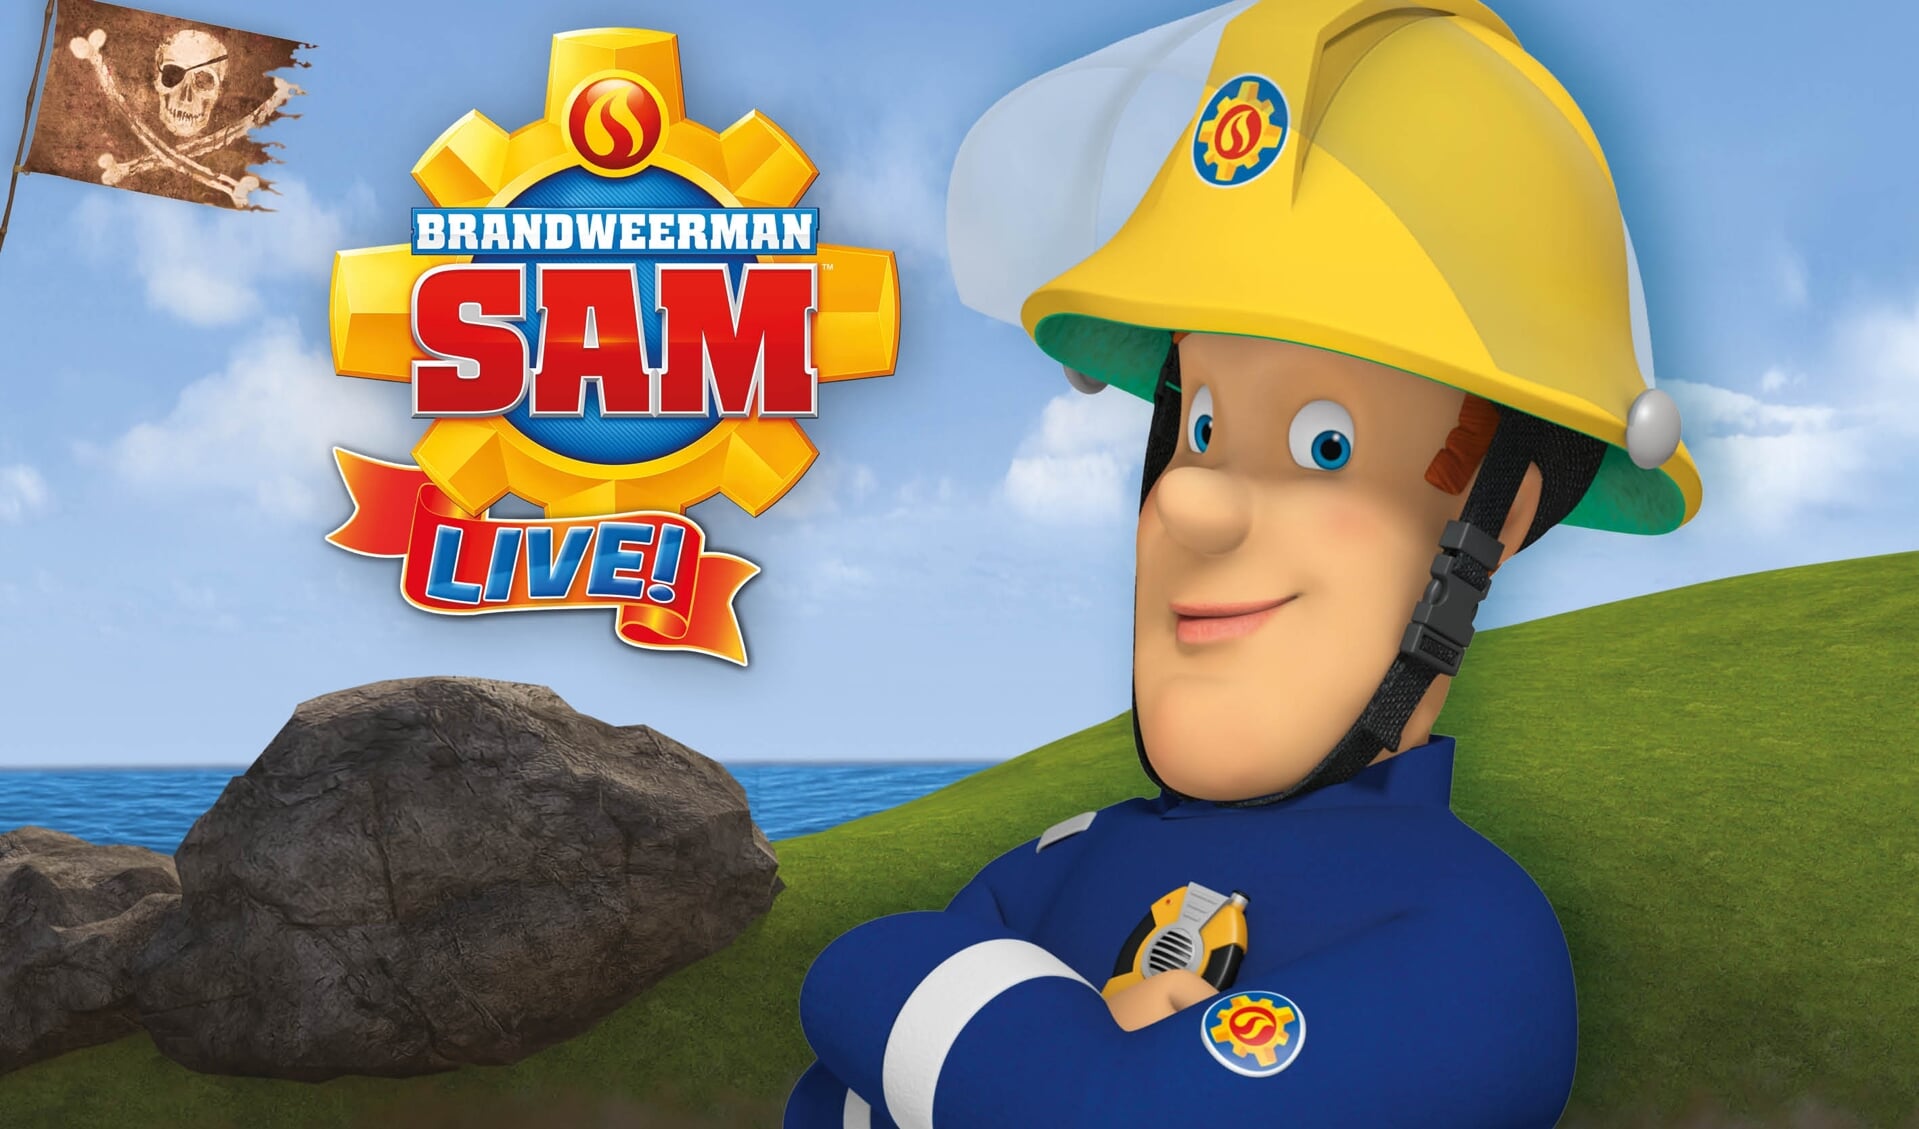 Brandweerman Sam Live!